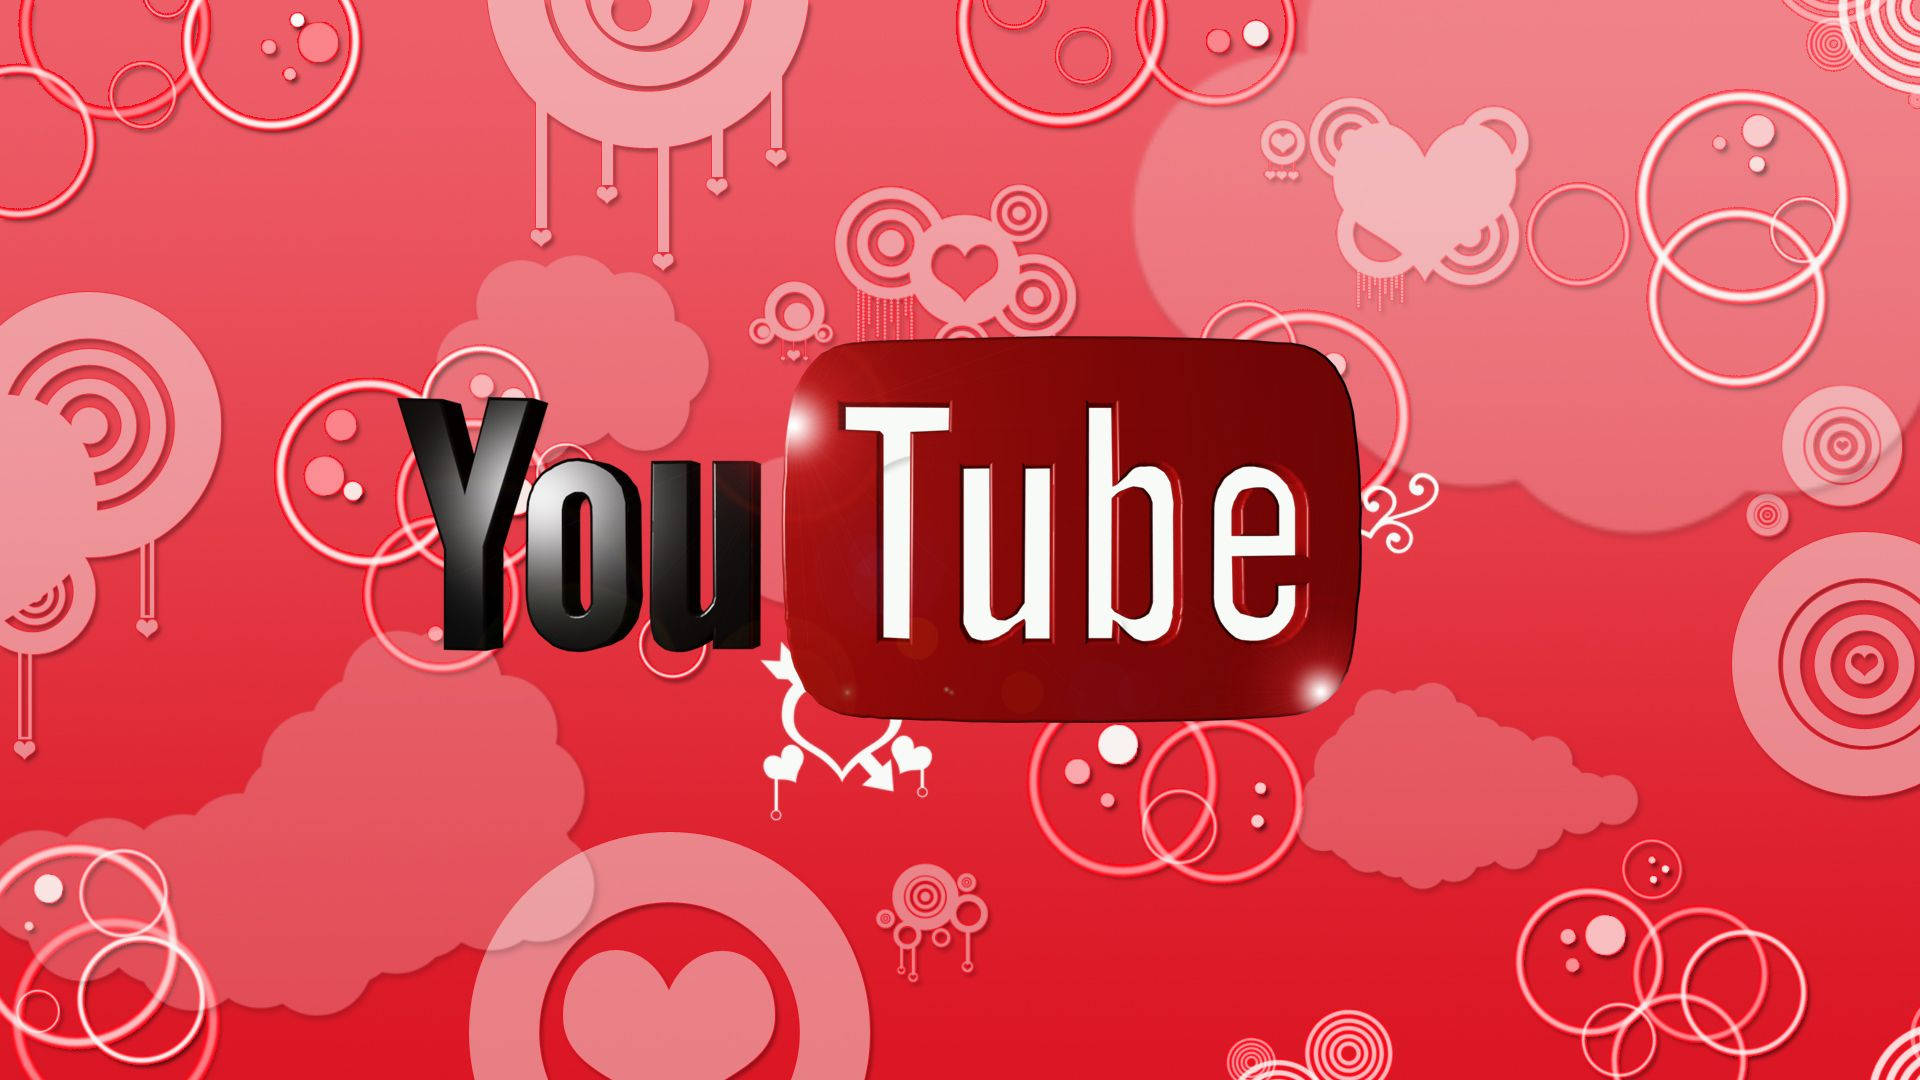 Youtube Logo On Geometric Design